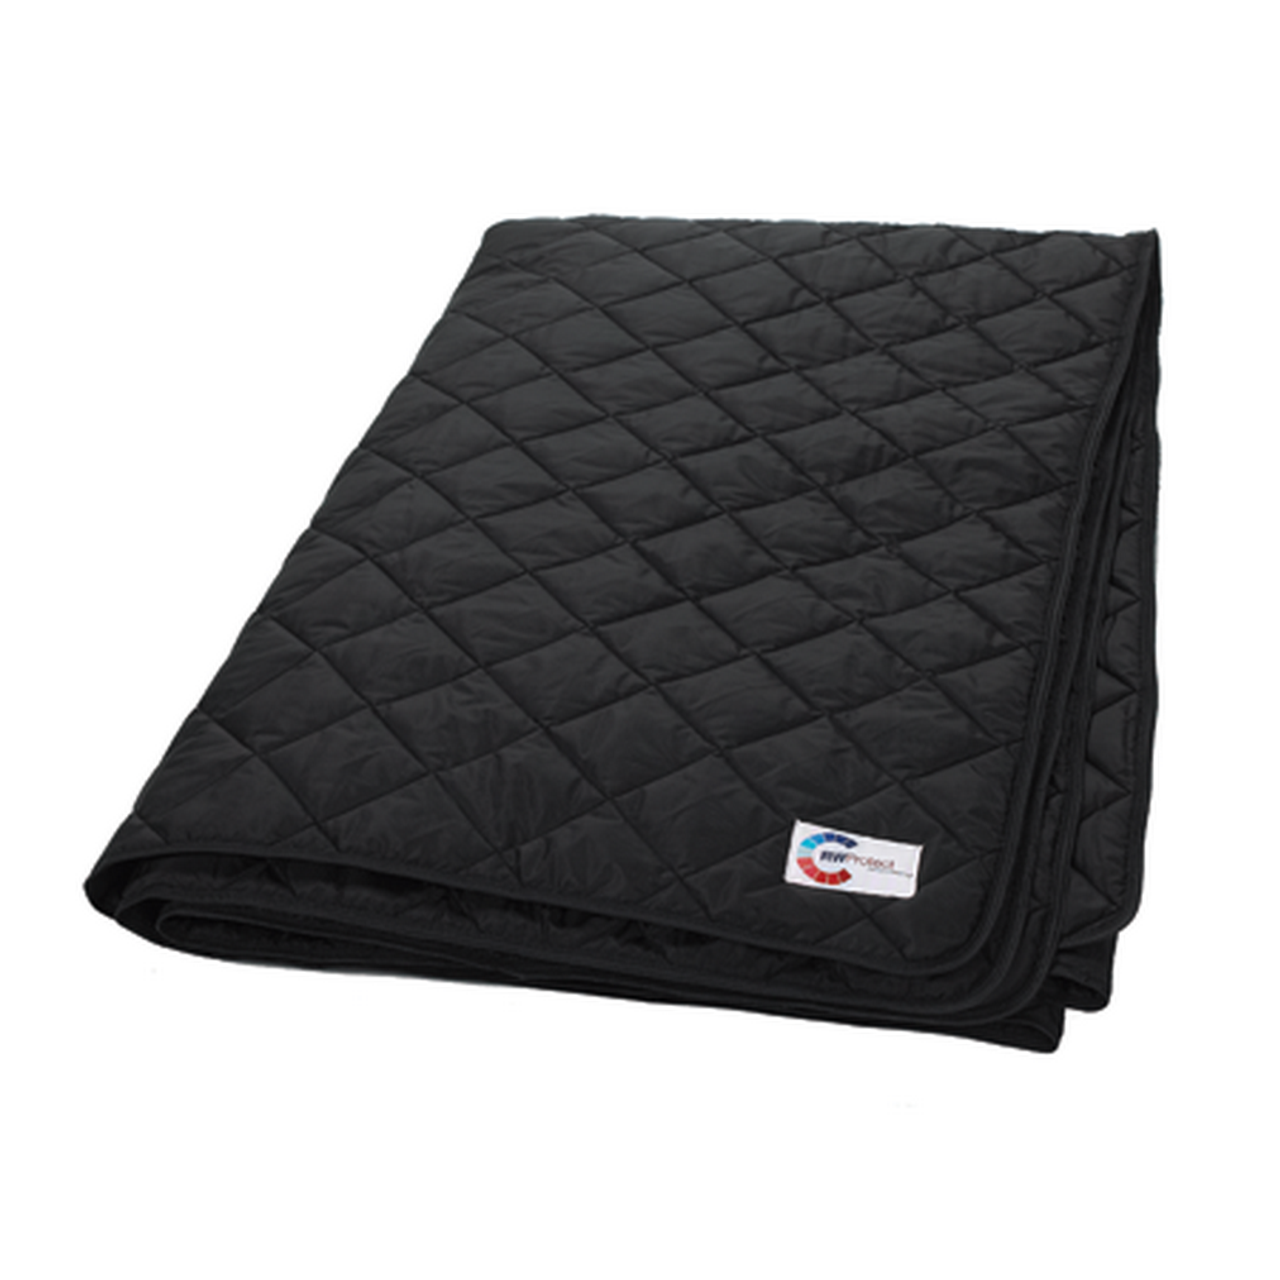 8' x 10' Insulated Blanket - QA Supplies